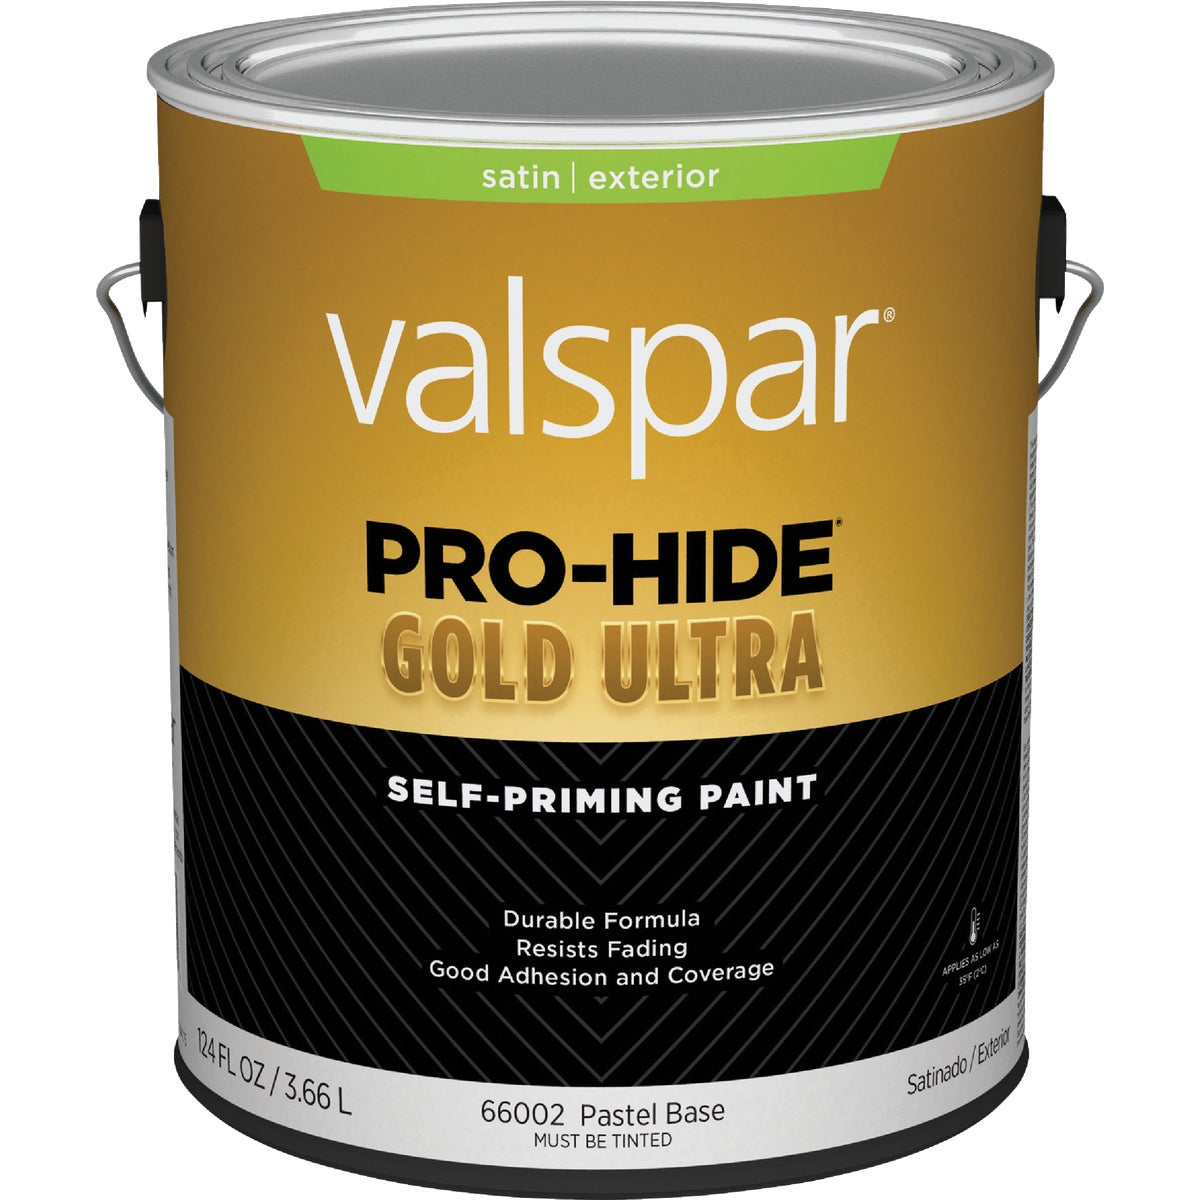 Valspar Pro-Hide Gold Ultra Latex Satin Exterior House Paint, Pastel Base, 1 Gal.